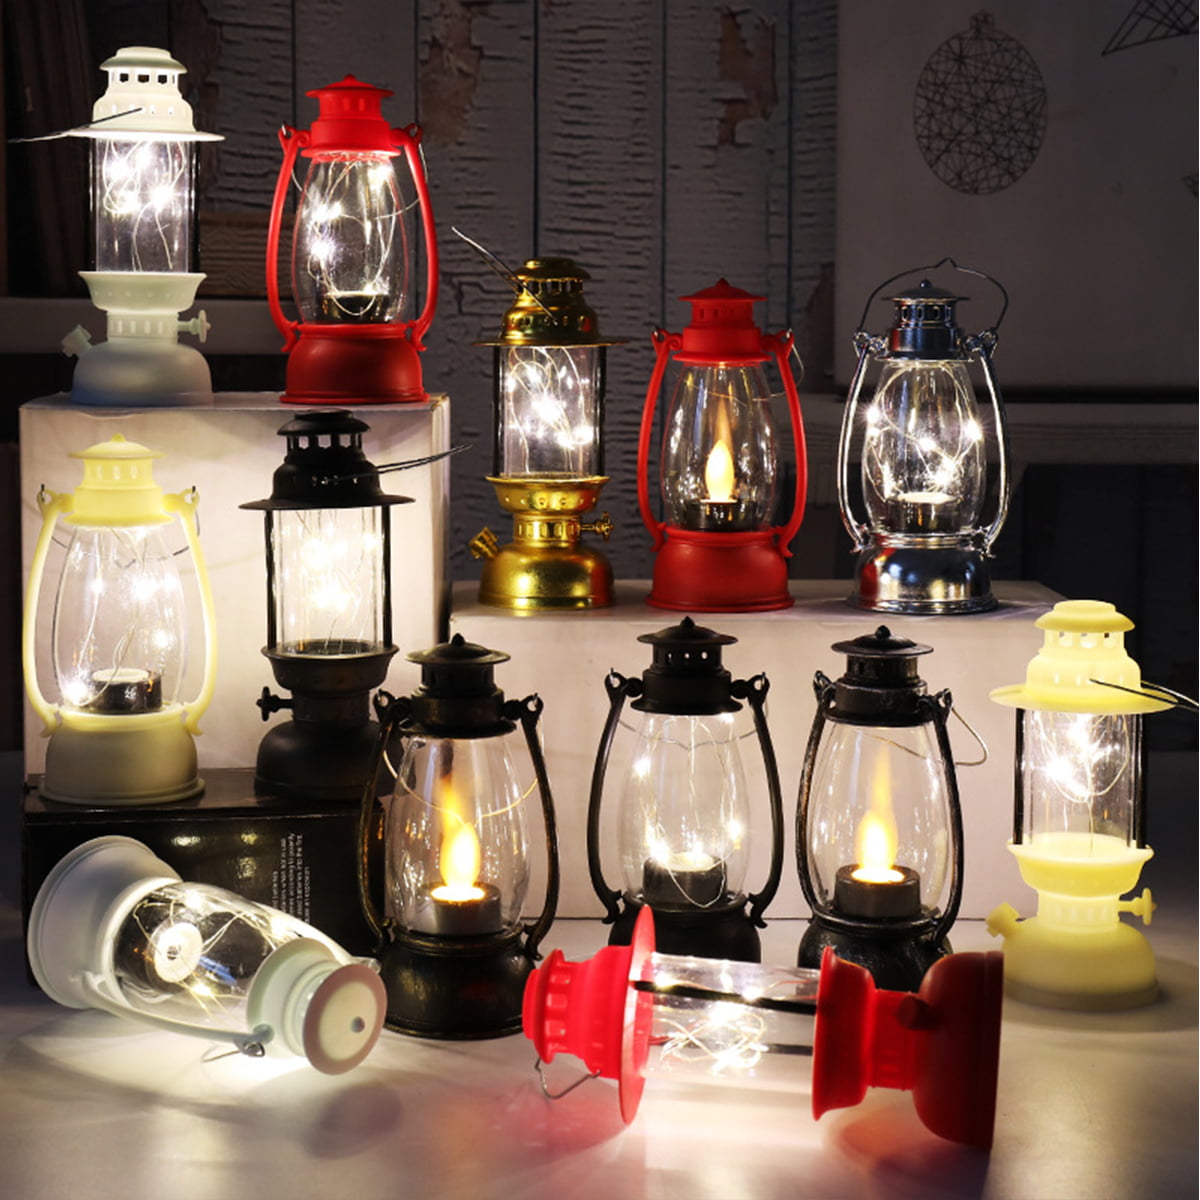 Lumavine Mini LED Lantern - 2 Piece Set